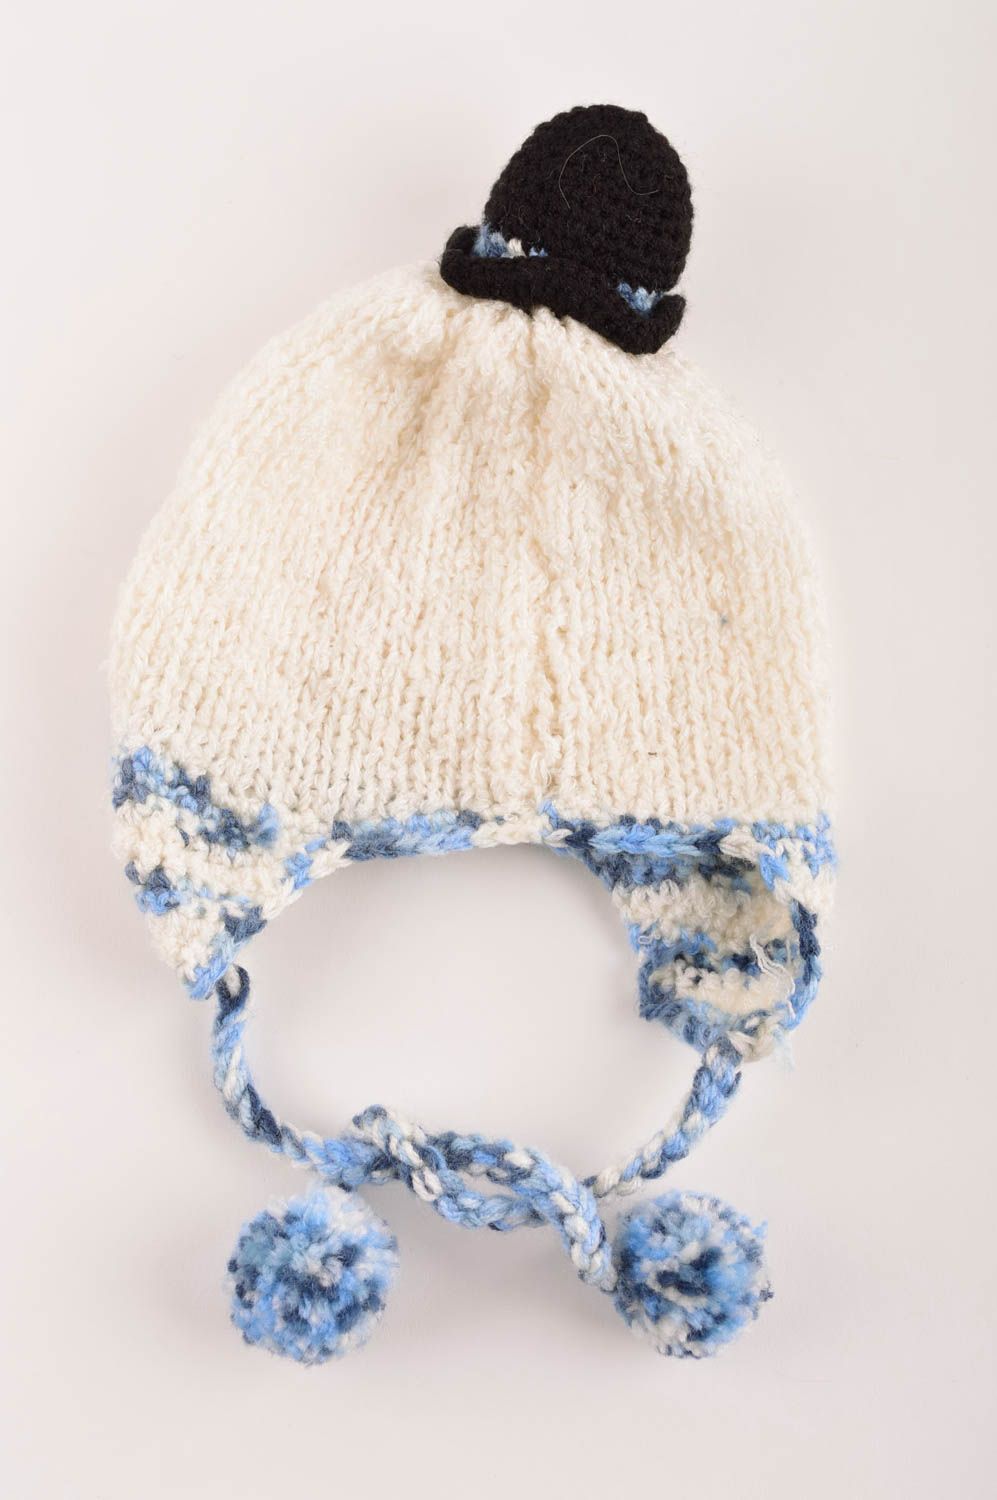 Handmade winter hat designer hat for baby unusual crochet hat gift ideas photo 3